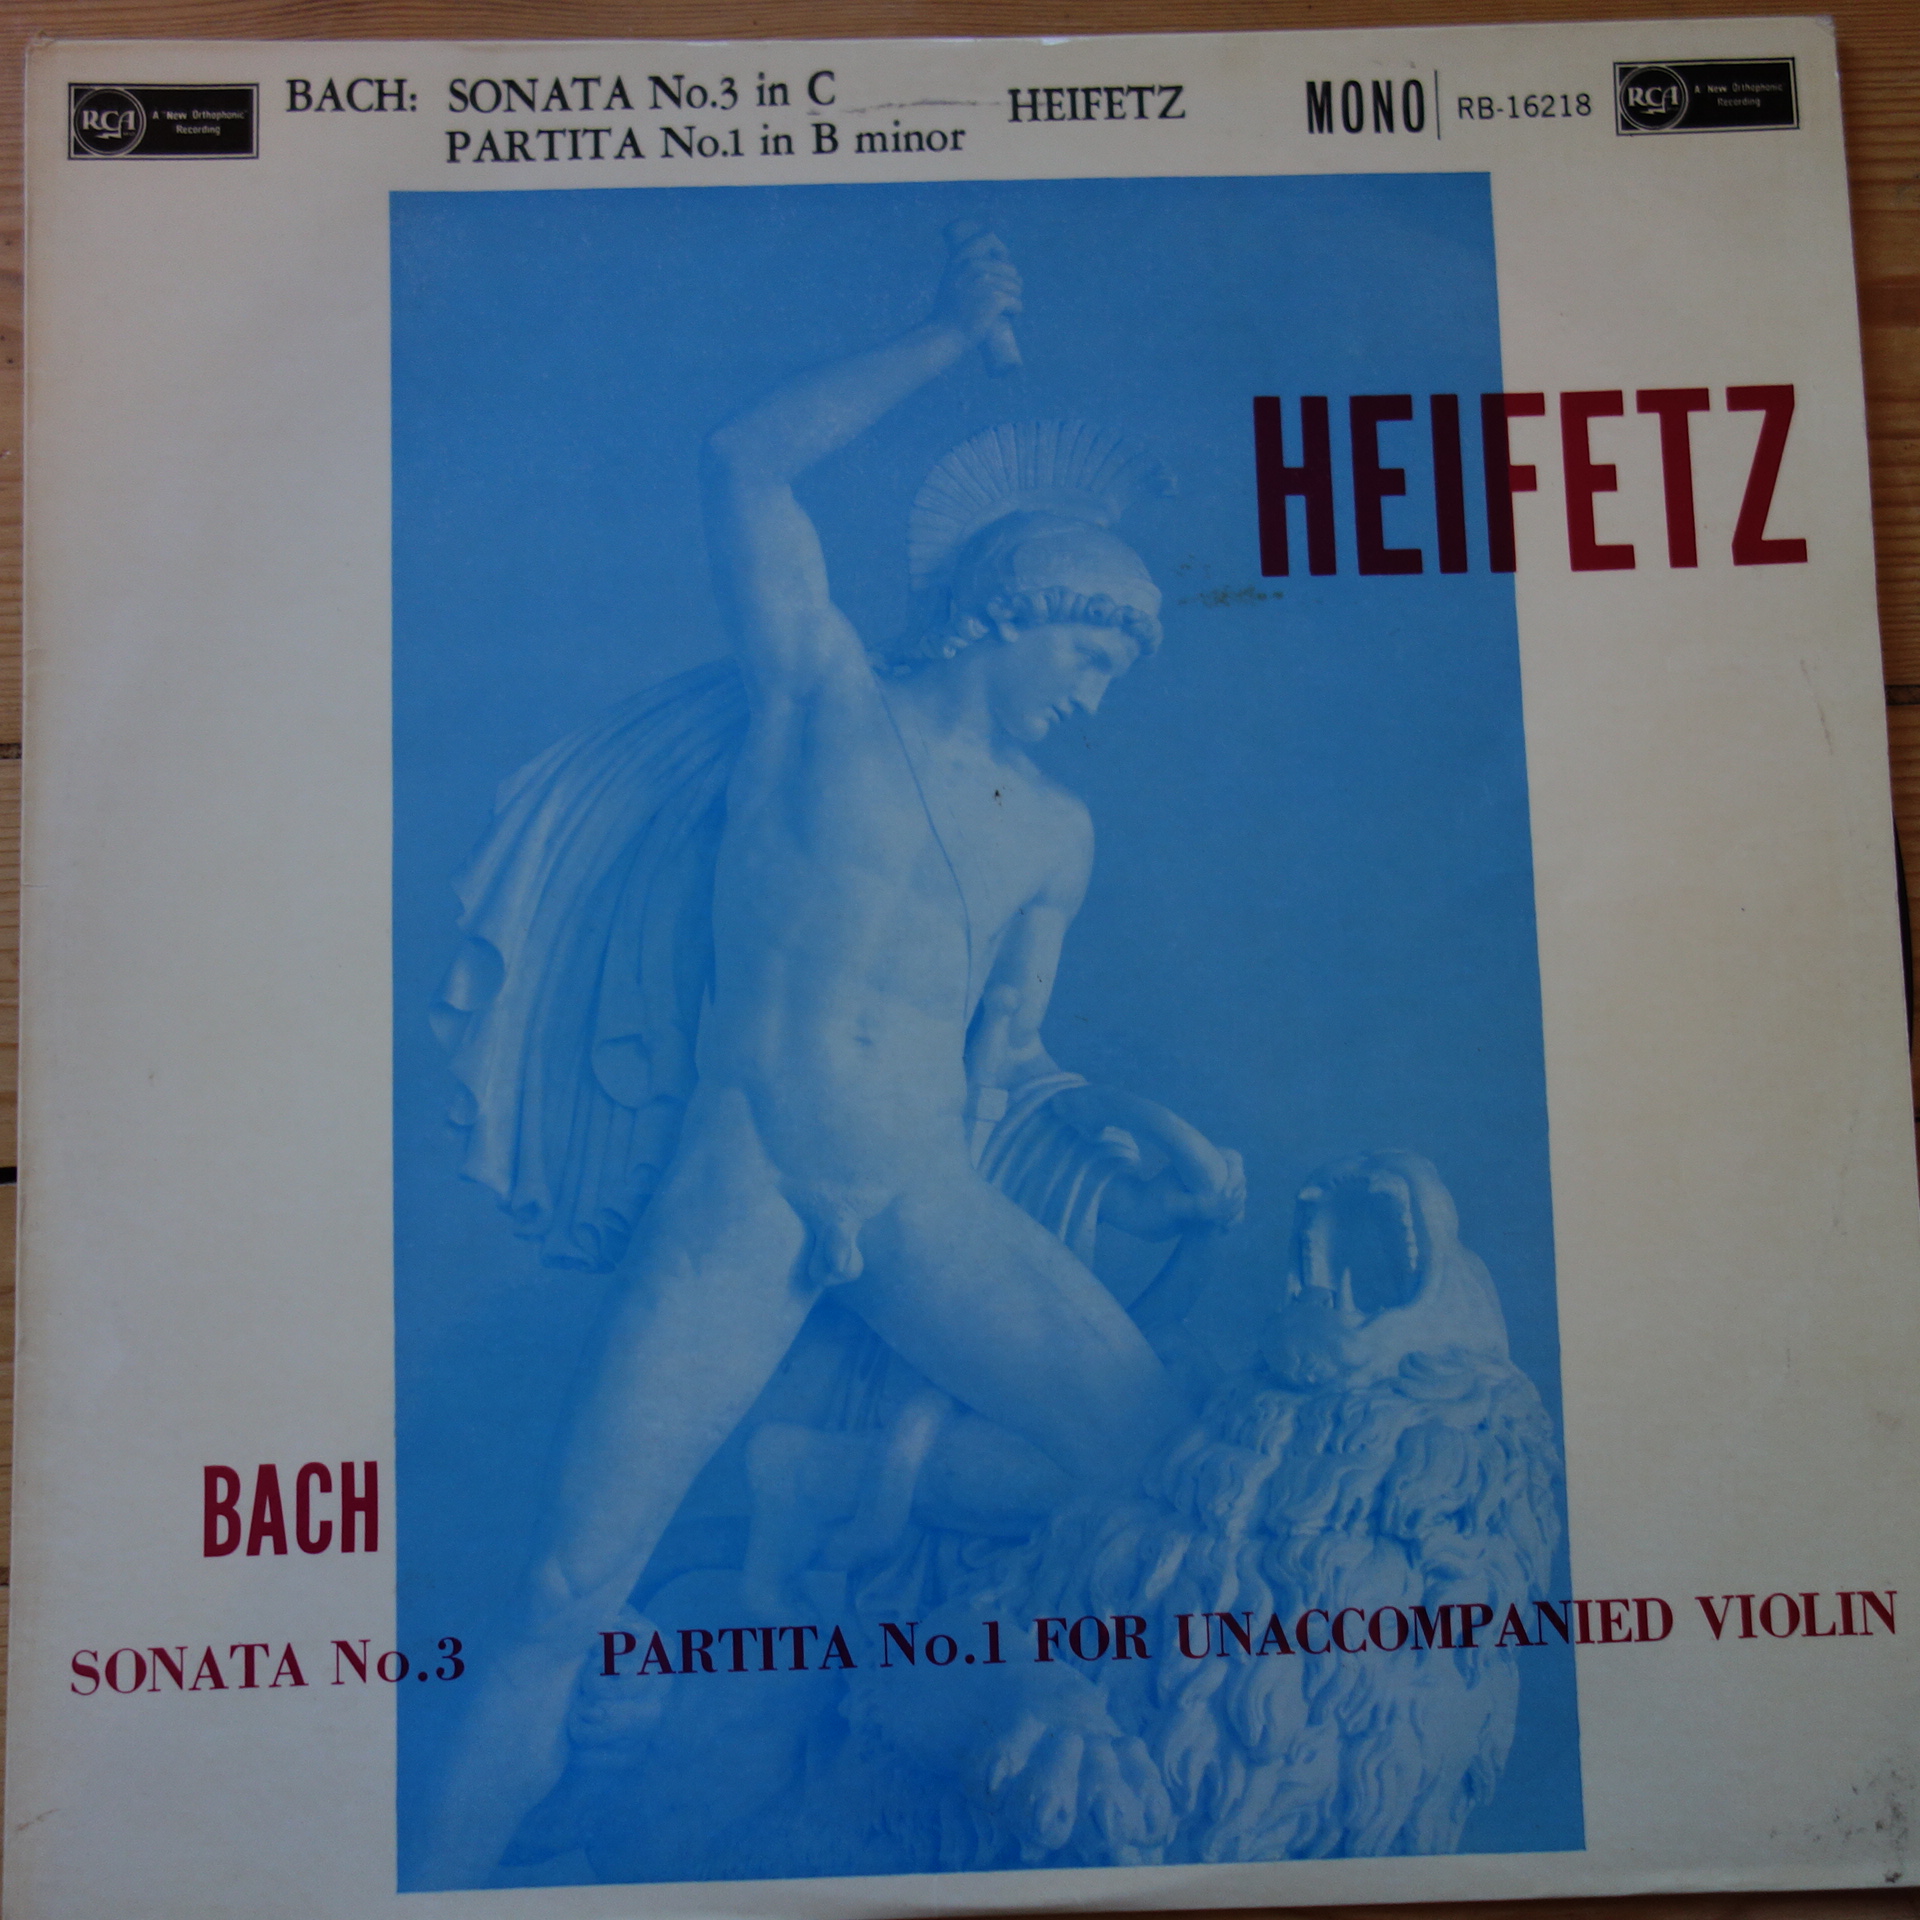 B-16218 Bach Sonata No.3 Partita No.1 For Unaccompanied Violin Heifetz